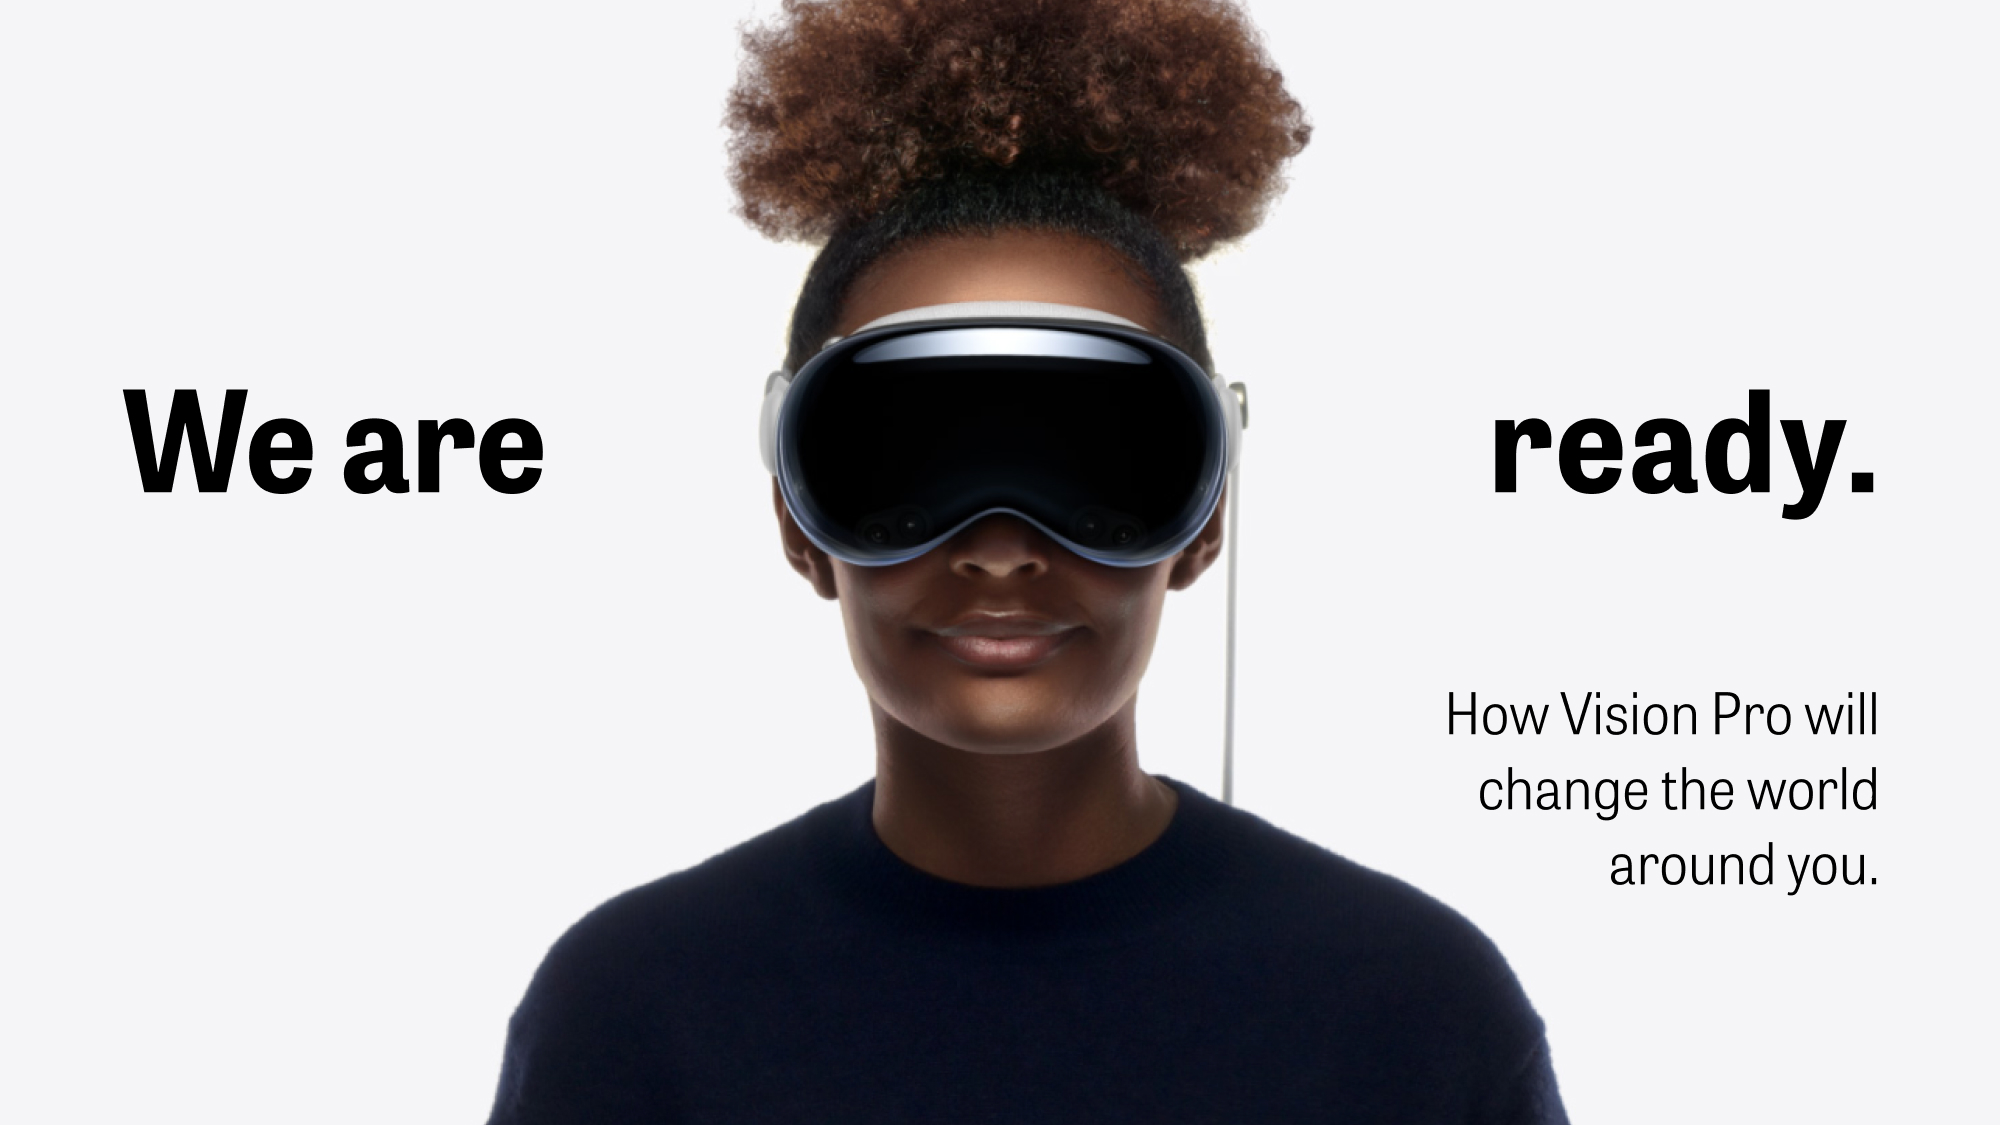 Apple's new Vision Pro